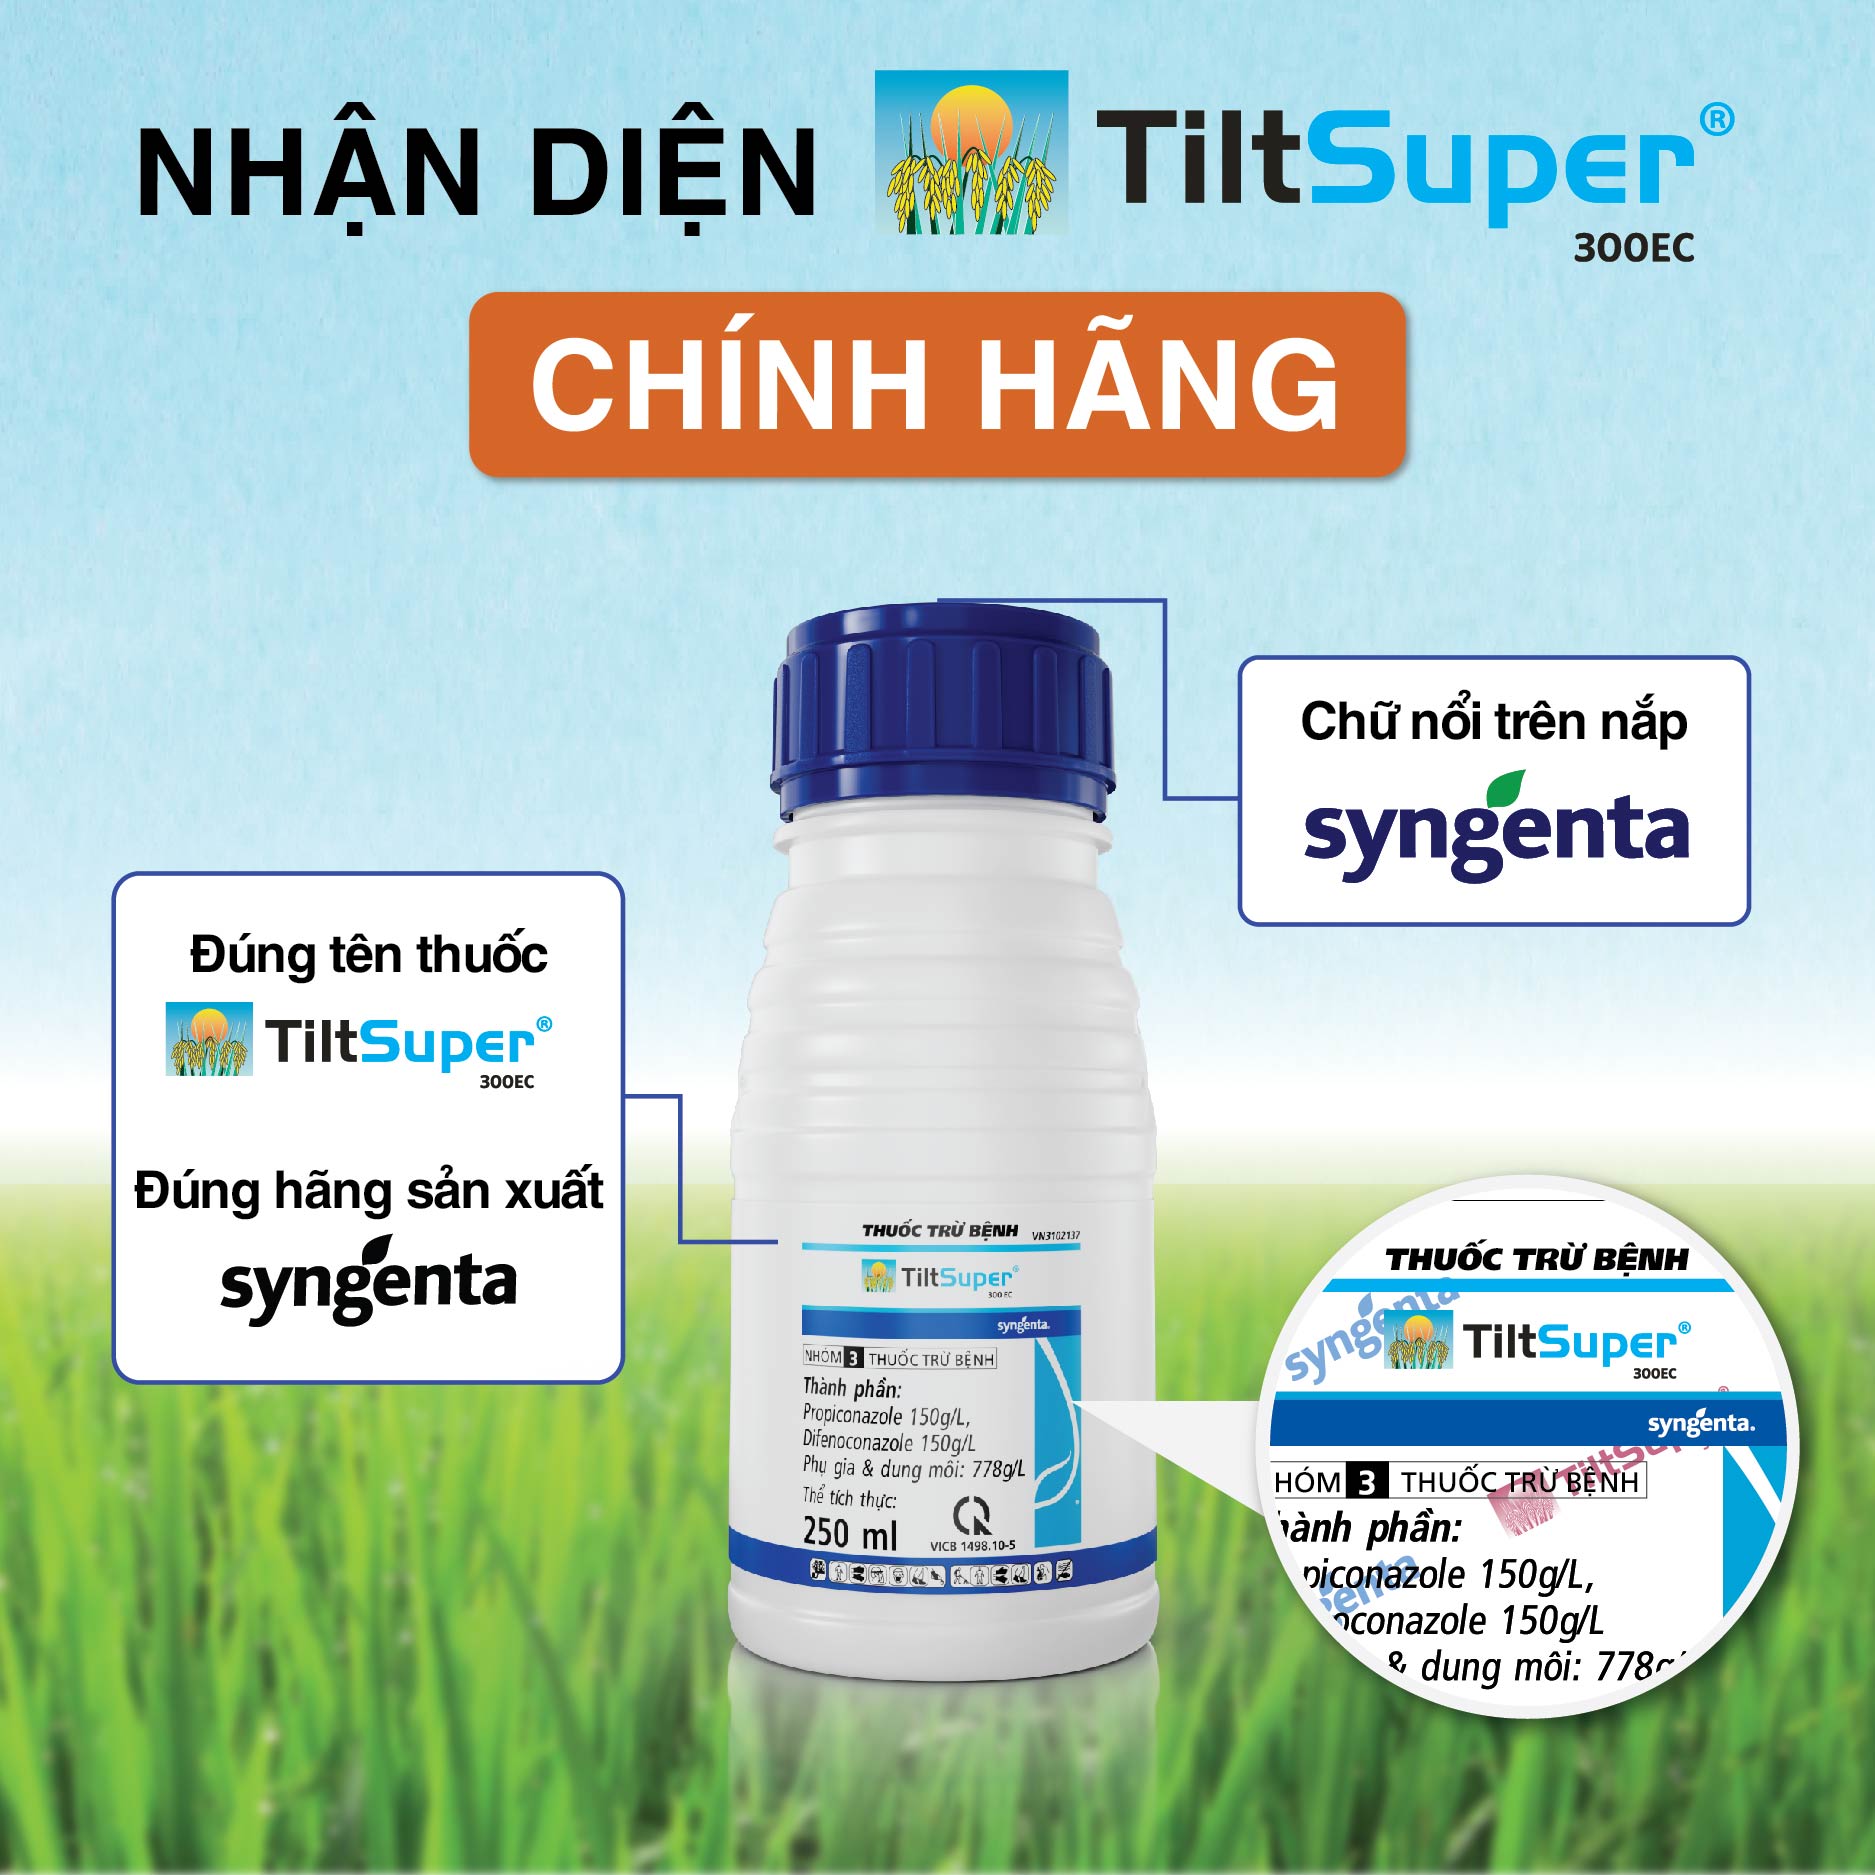 Nhan biet hang chinh hang Syngenta - Tilt Super